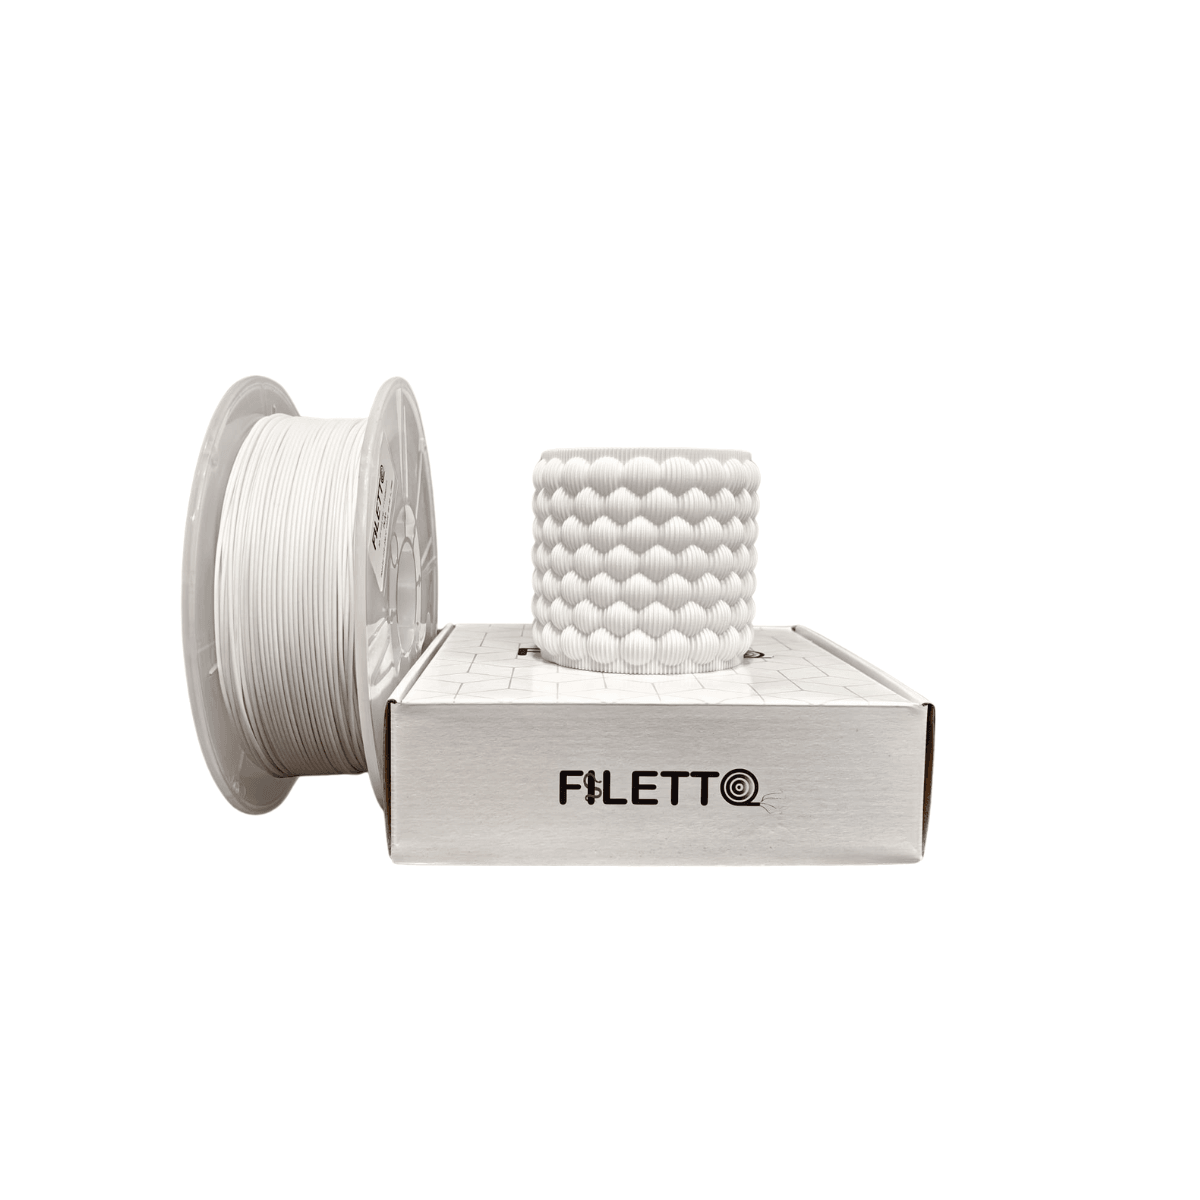 Filetto Pla+ Filament 1.75mm 1 KG - Beyaz